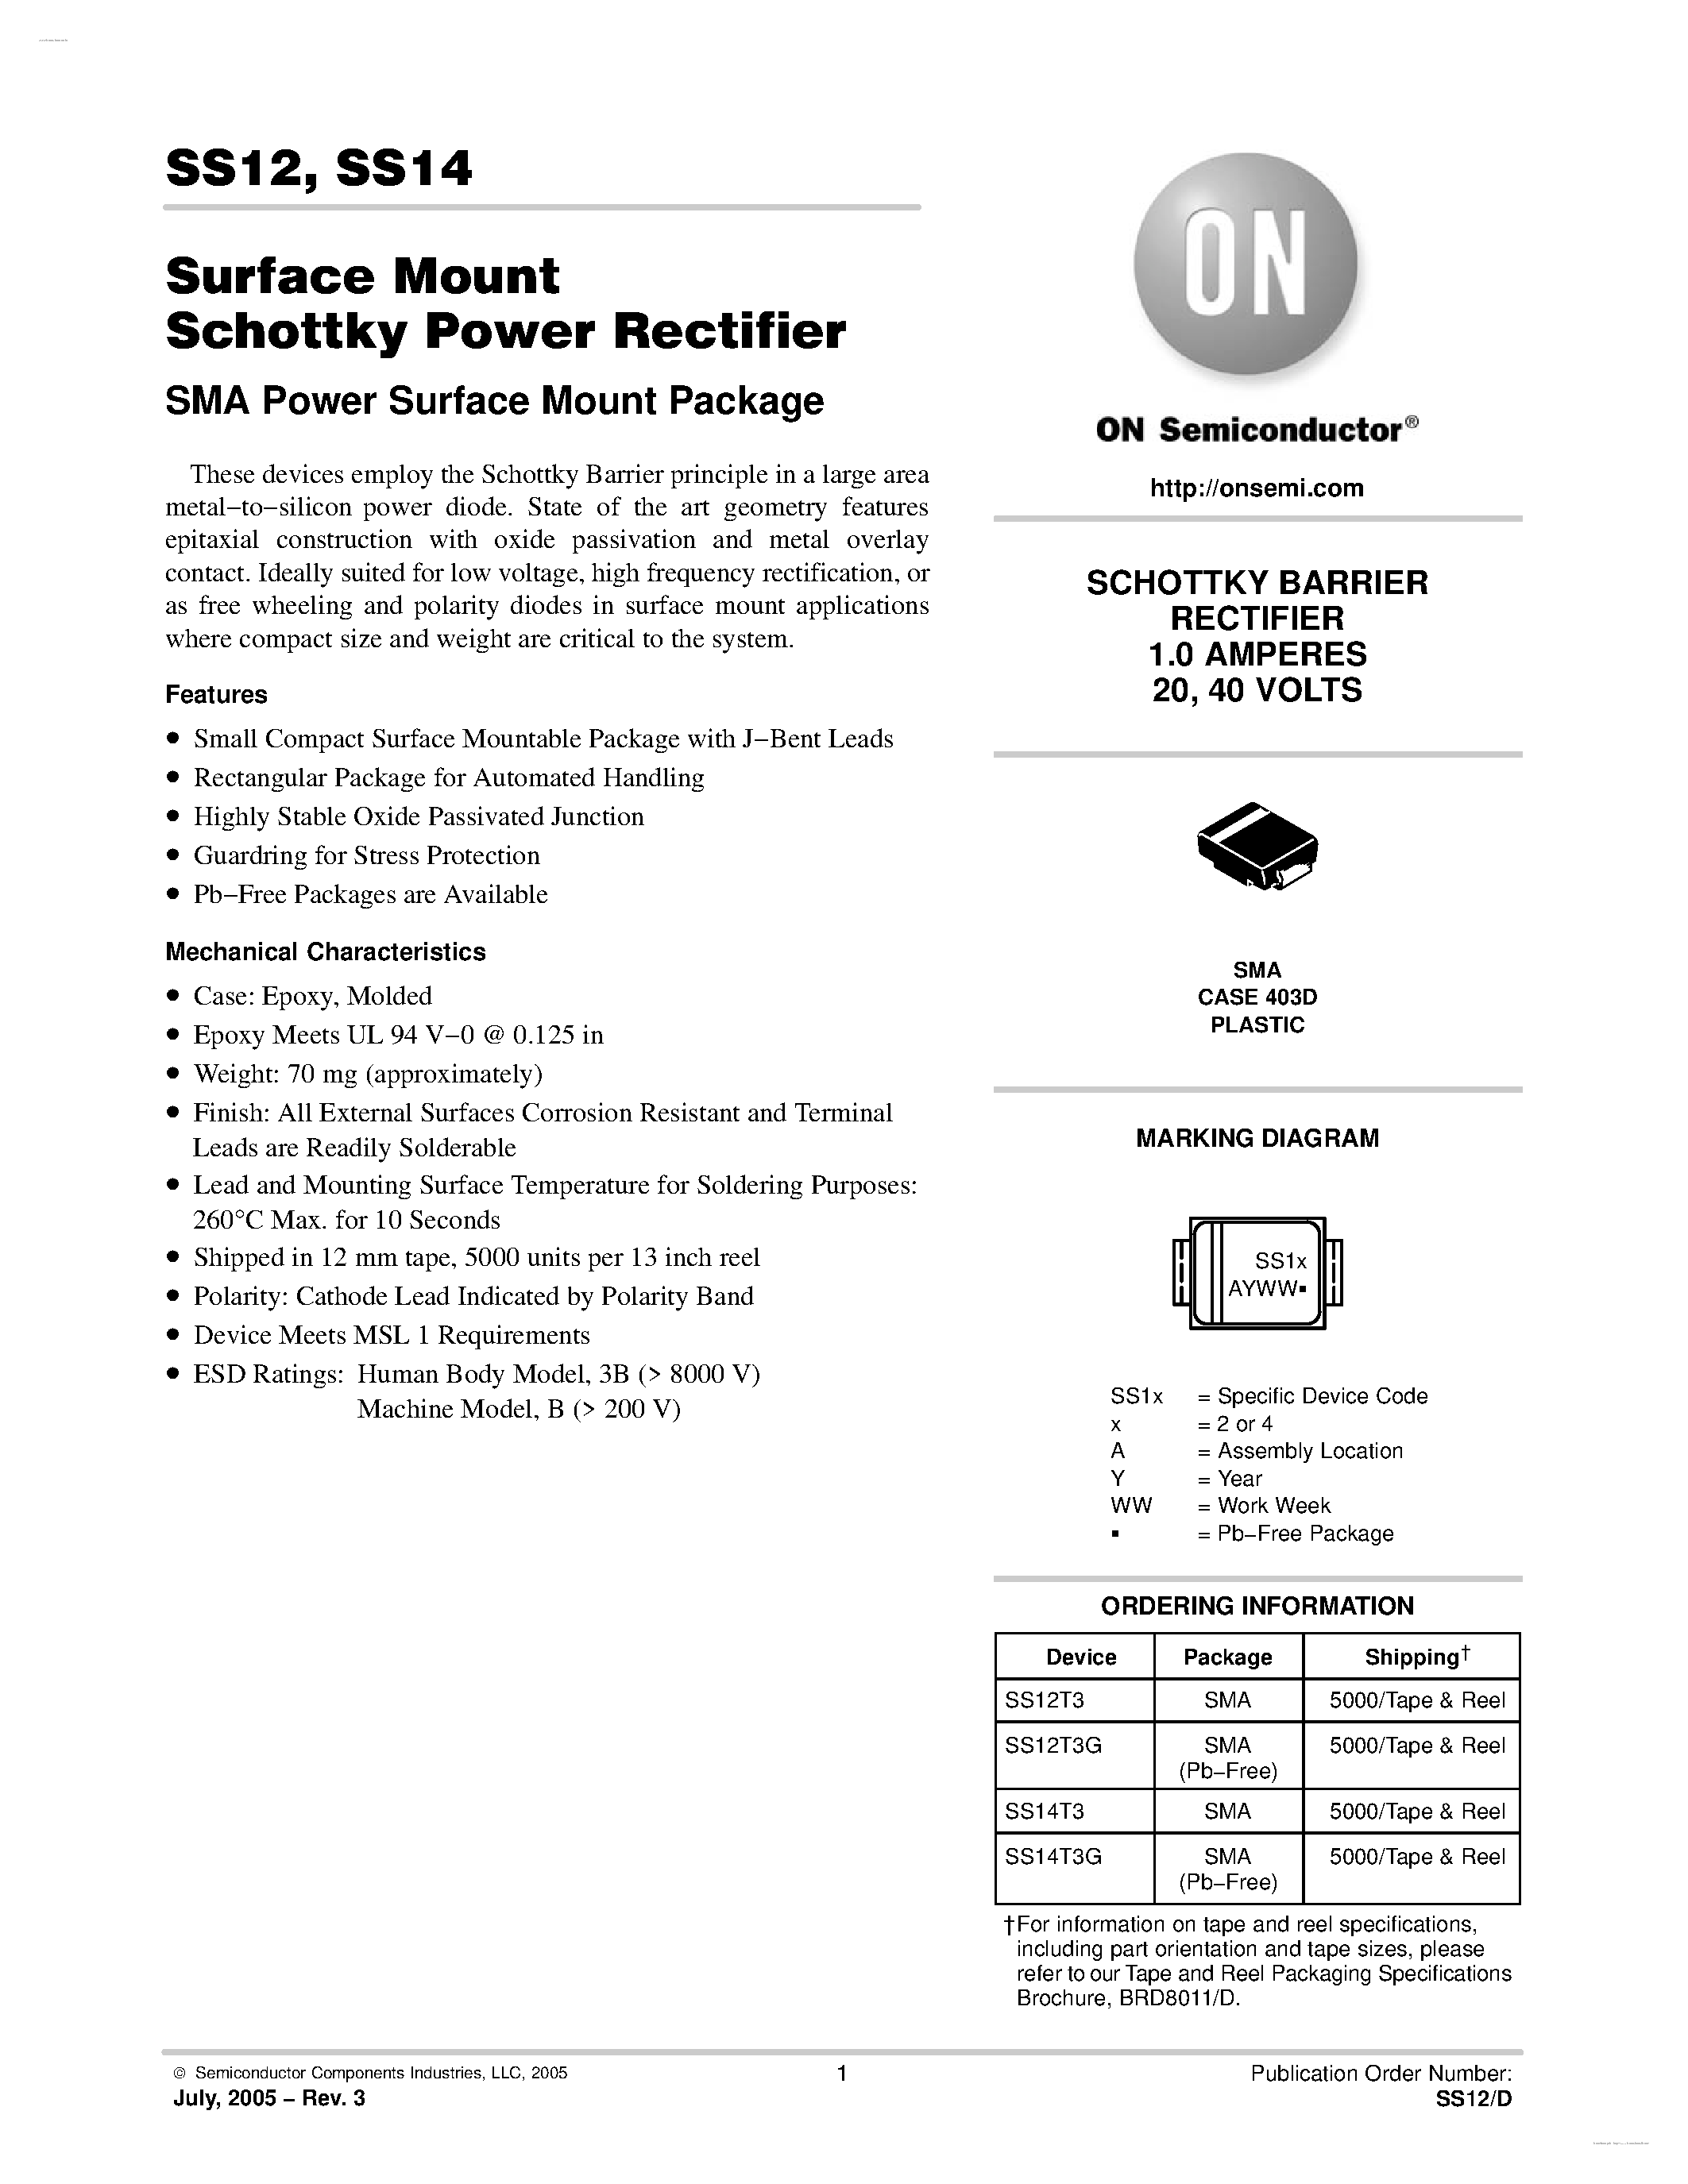 Datasheet SS12 - (SS12 / SS14) Surface Mount Schottky Power Rectifier page 1